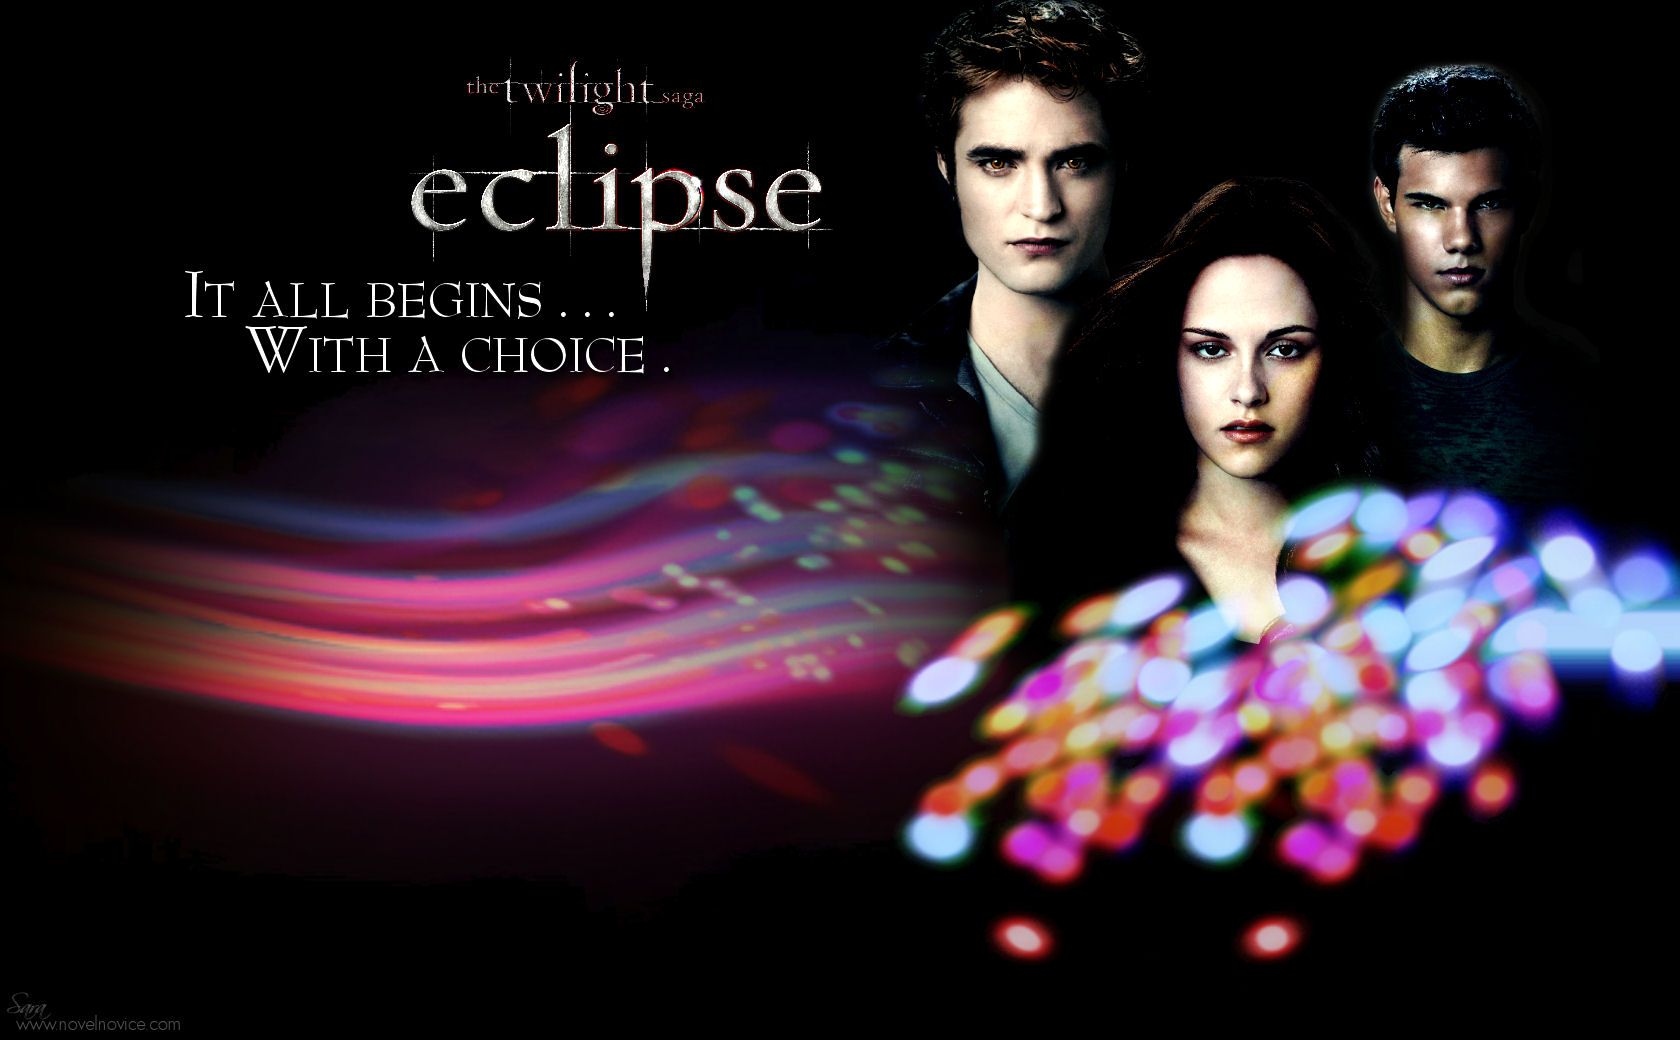 The Twilight Saga Eclipse More Desktop Wallpapers - Novel Novice